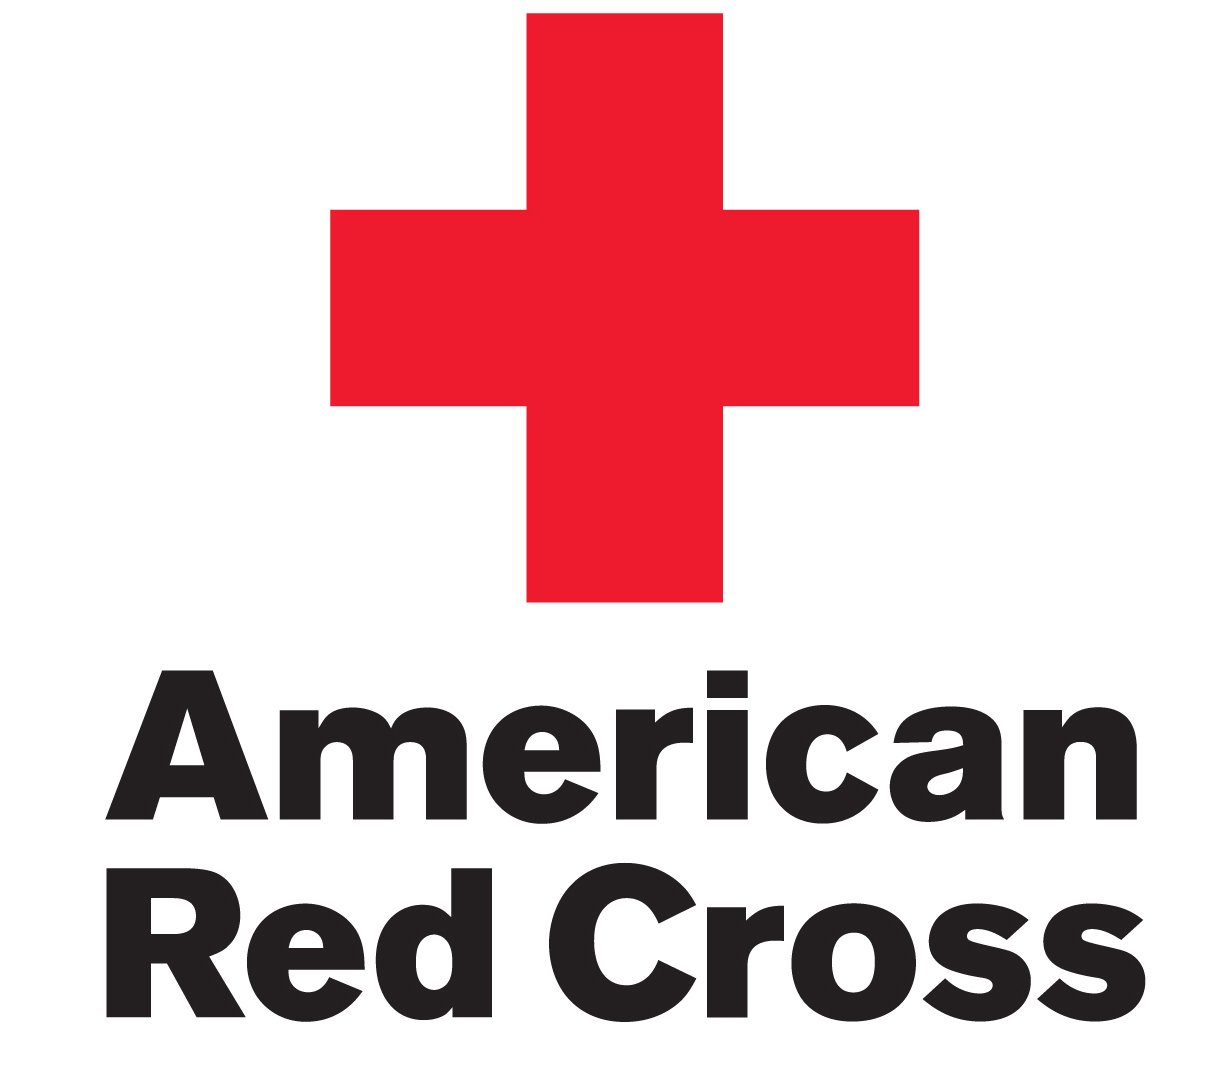 Red Cross 1.jpg